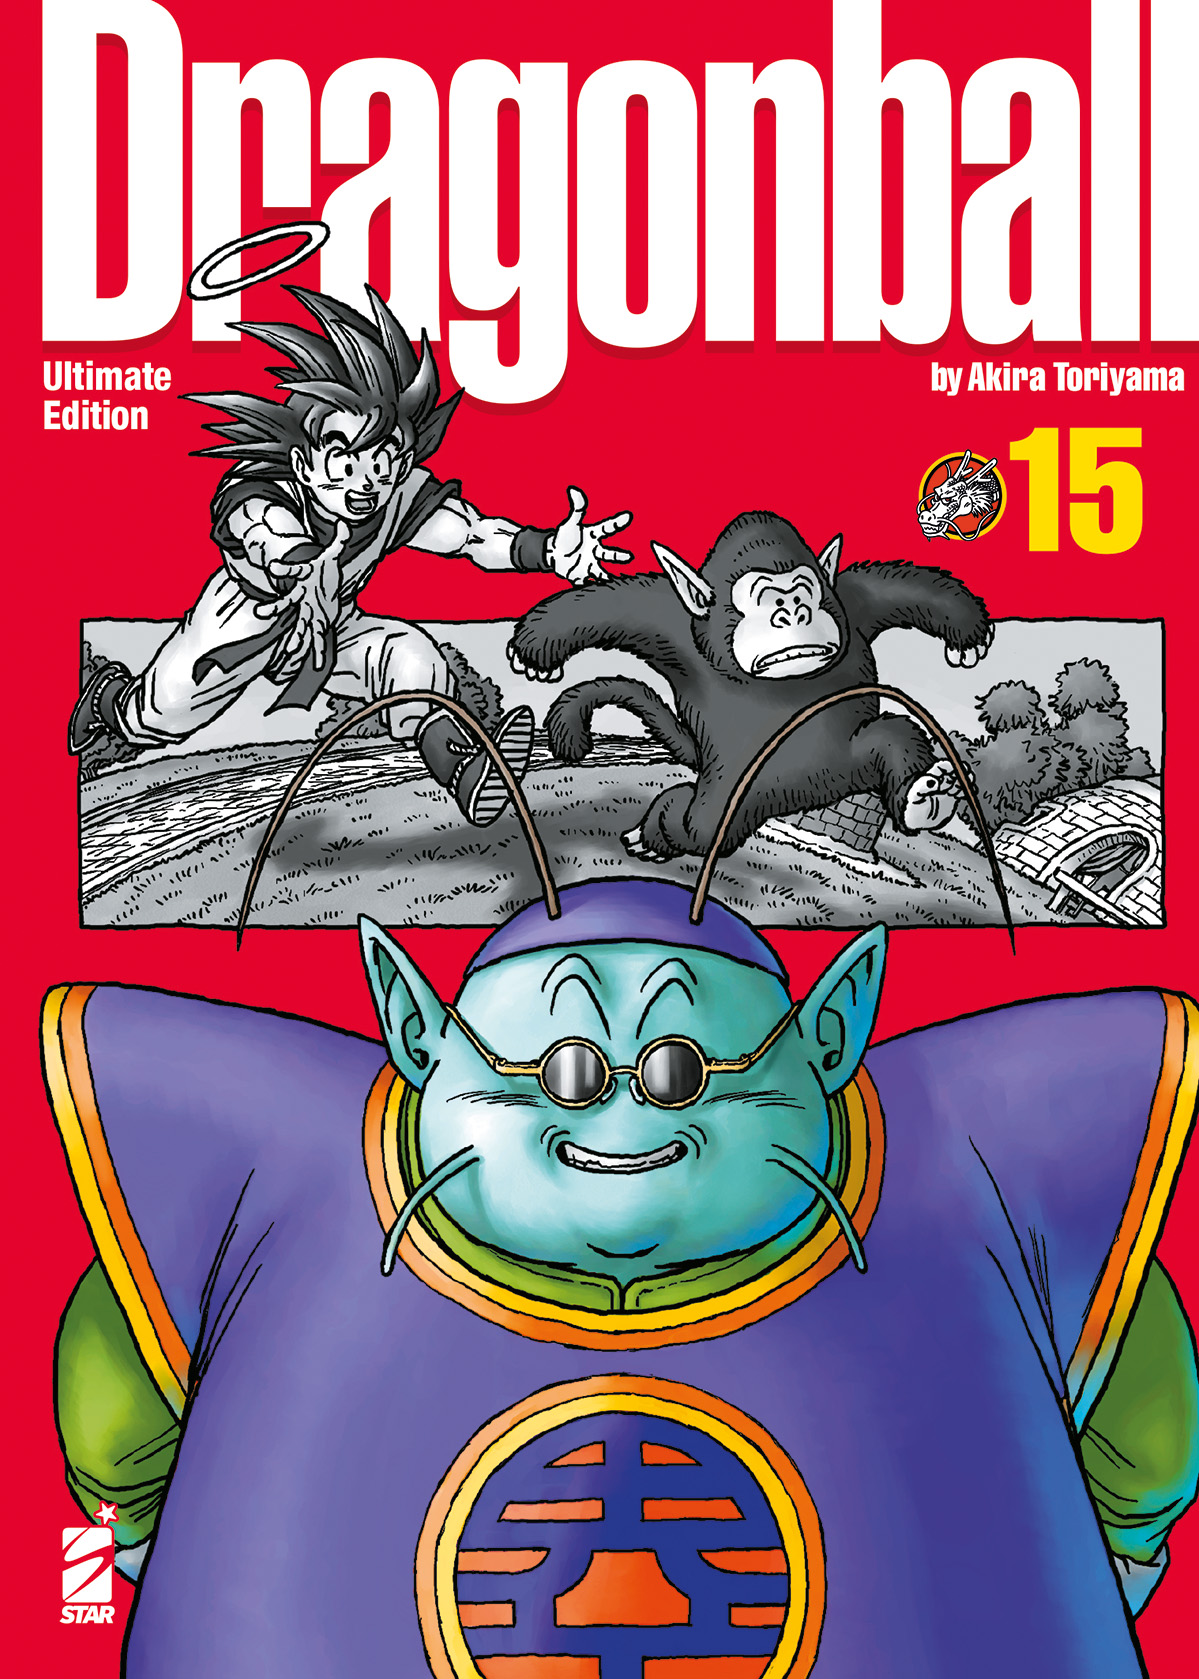 Dragon Ball Ultimate Edition 15 - Inside Collectors